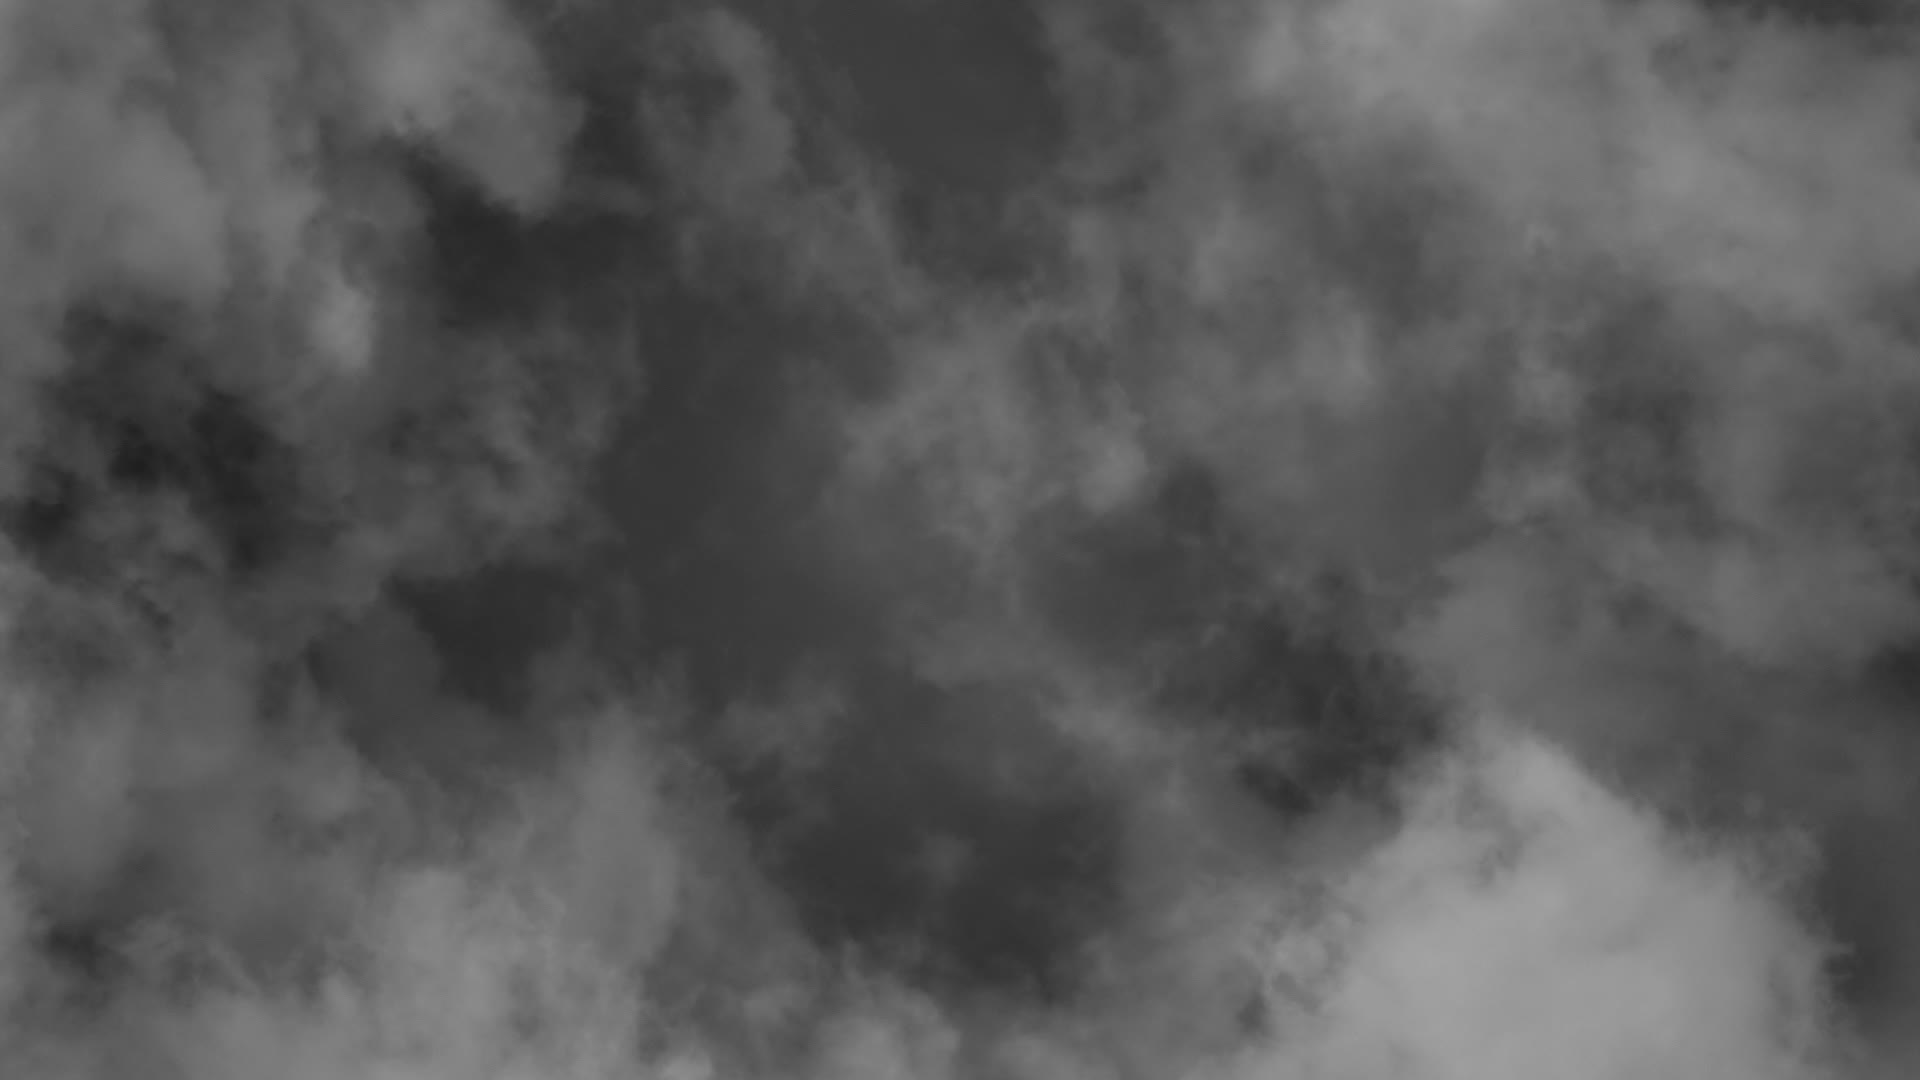 black clouds background